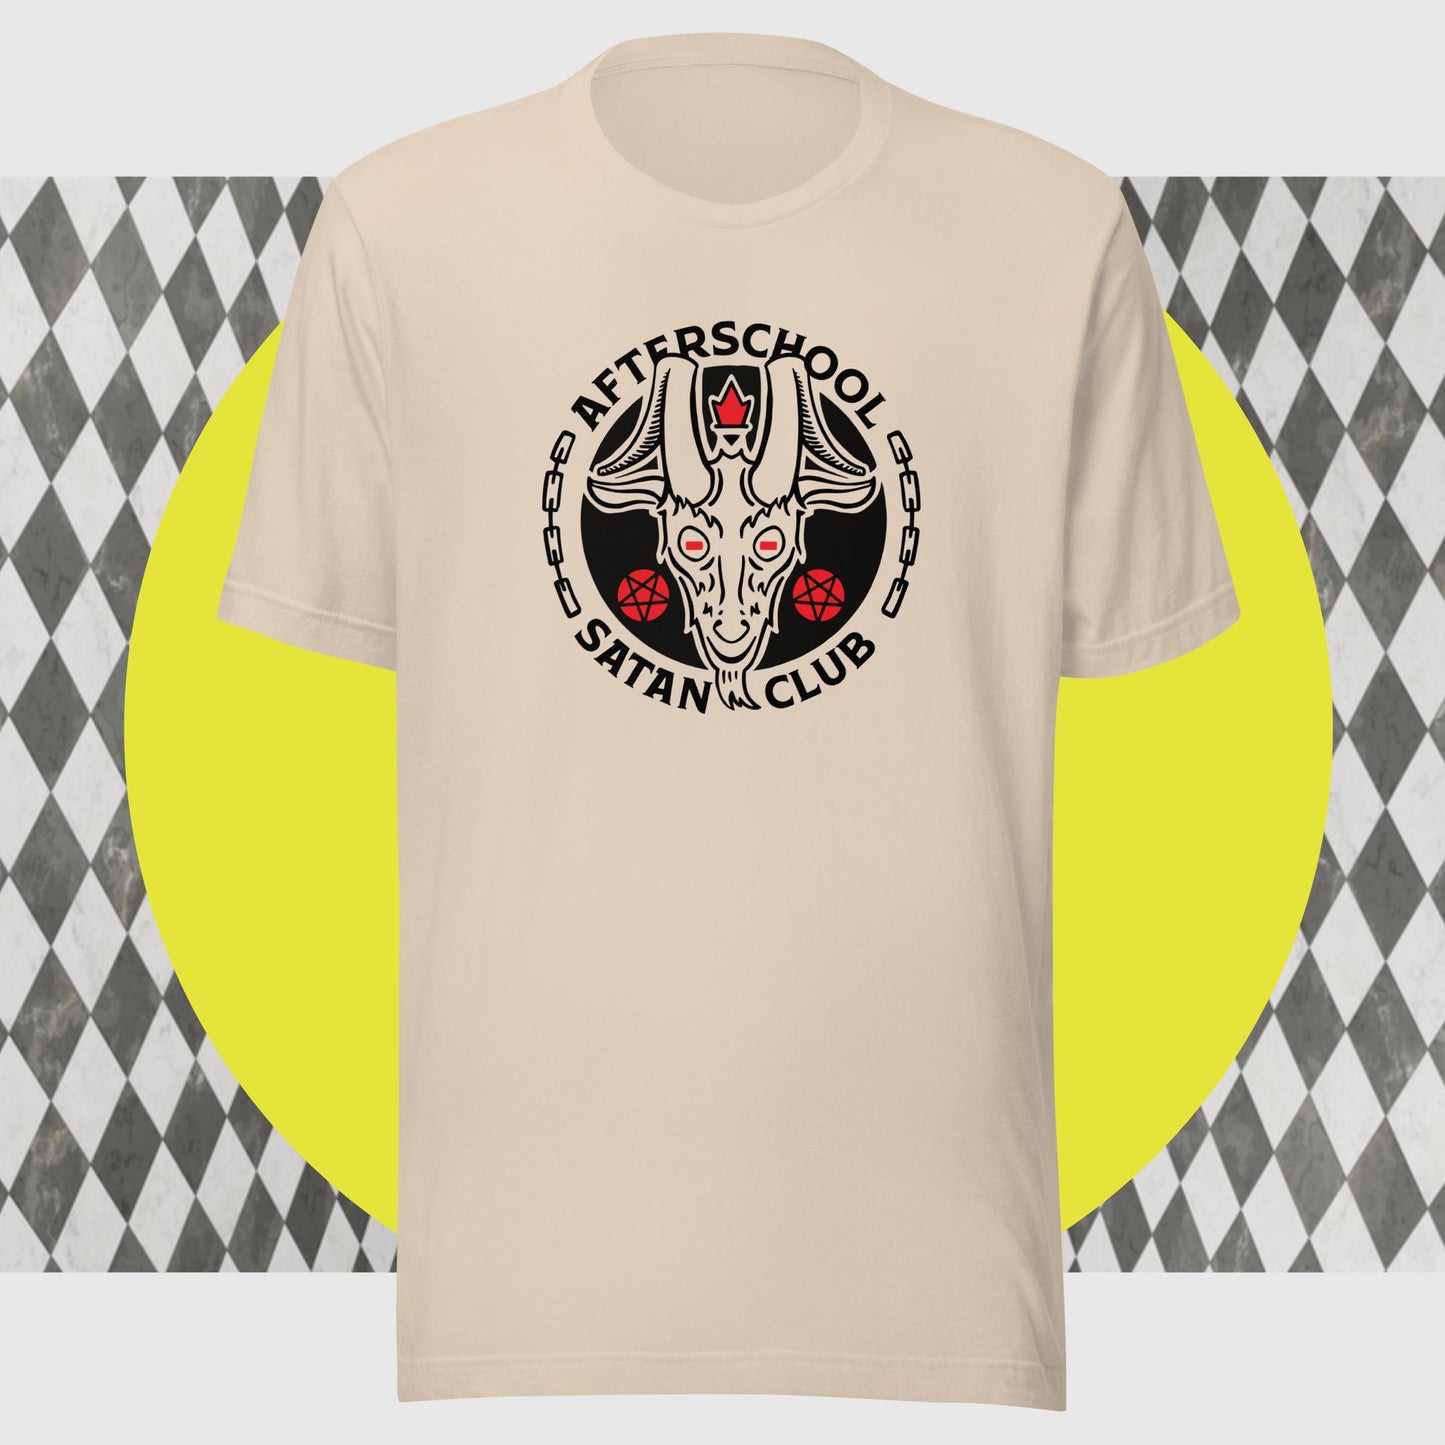 Afterschool Satan Club T-Shirt – Bright